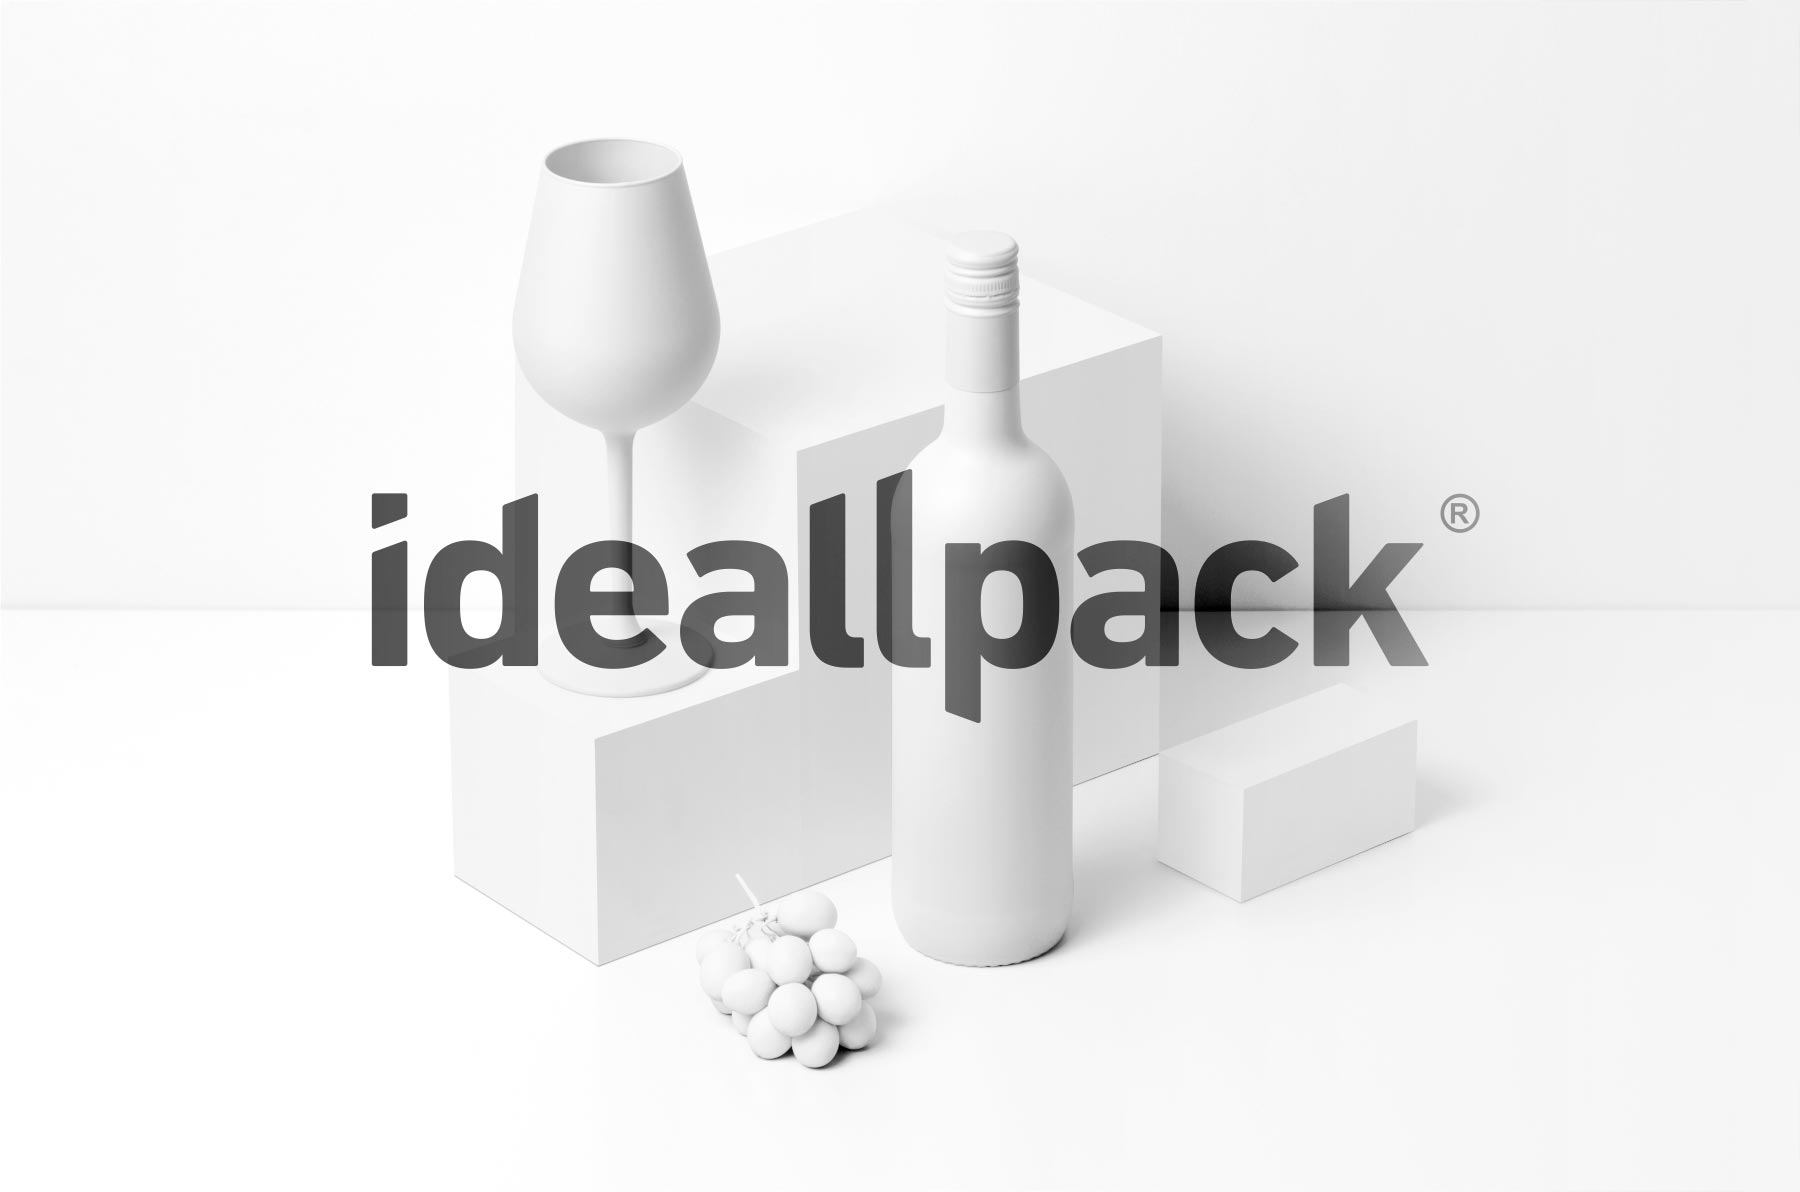 ideallpack identidad corporativa - javier real